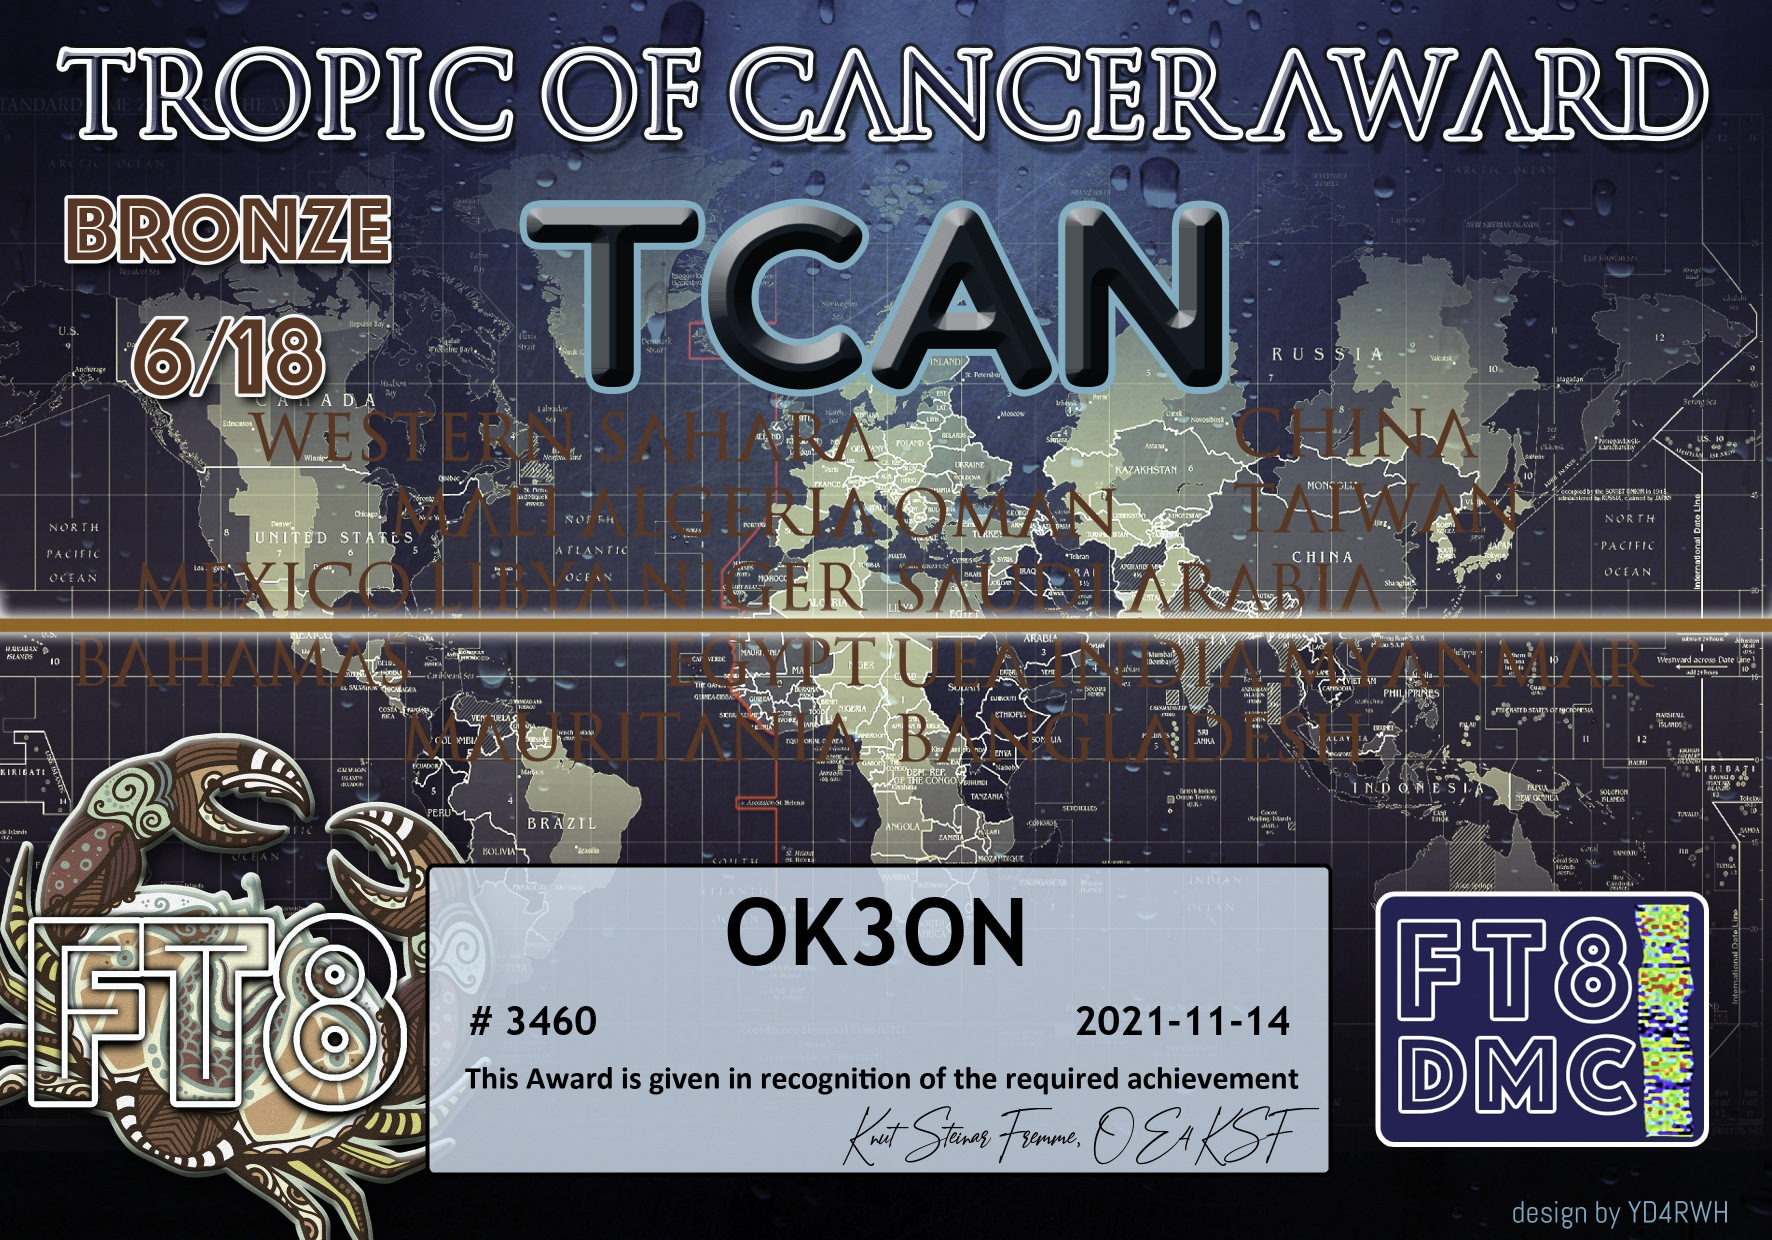 awards/OK3ON-TCAN-BRONZE_FT8DMC.jpg